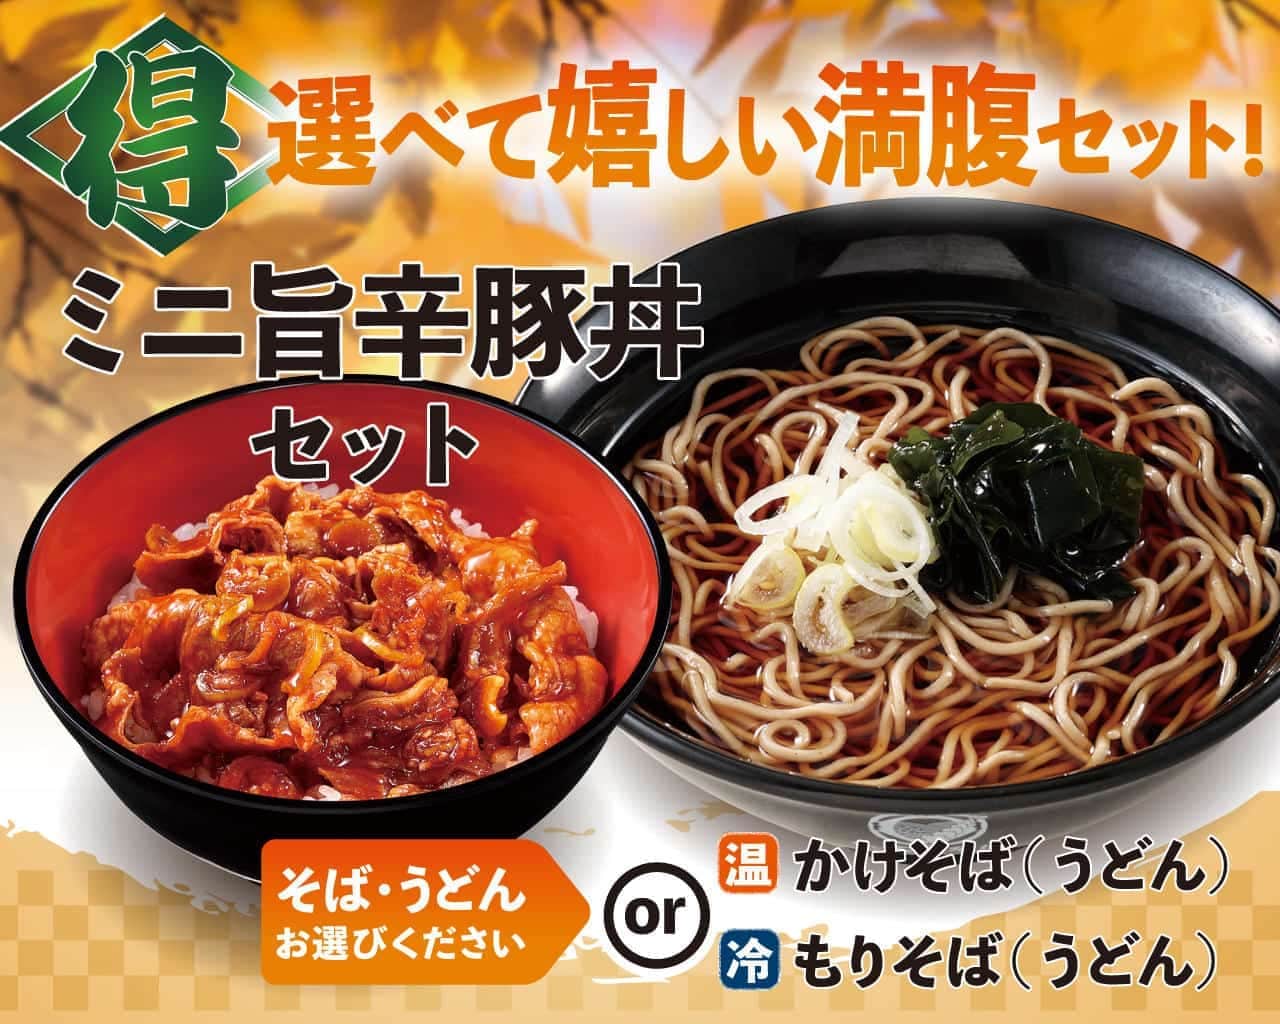 Meidai Fuji Soba "Mini Umami Spicy Pork Bowl Set", "Mini Beni Ginger Tendon Set", "Mini Negitama Bowl Set".